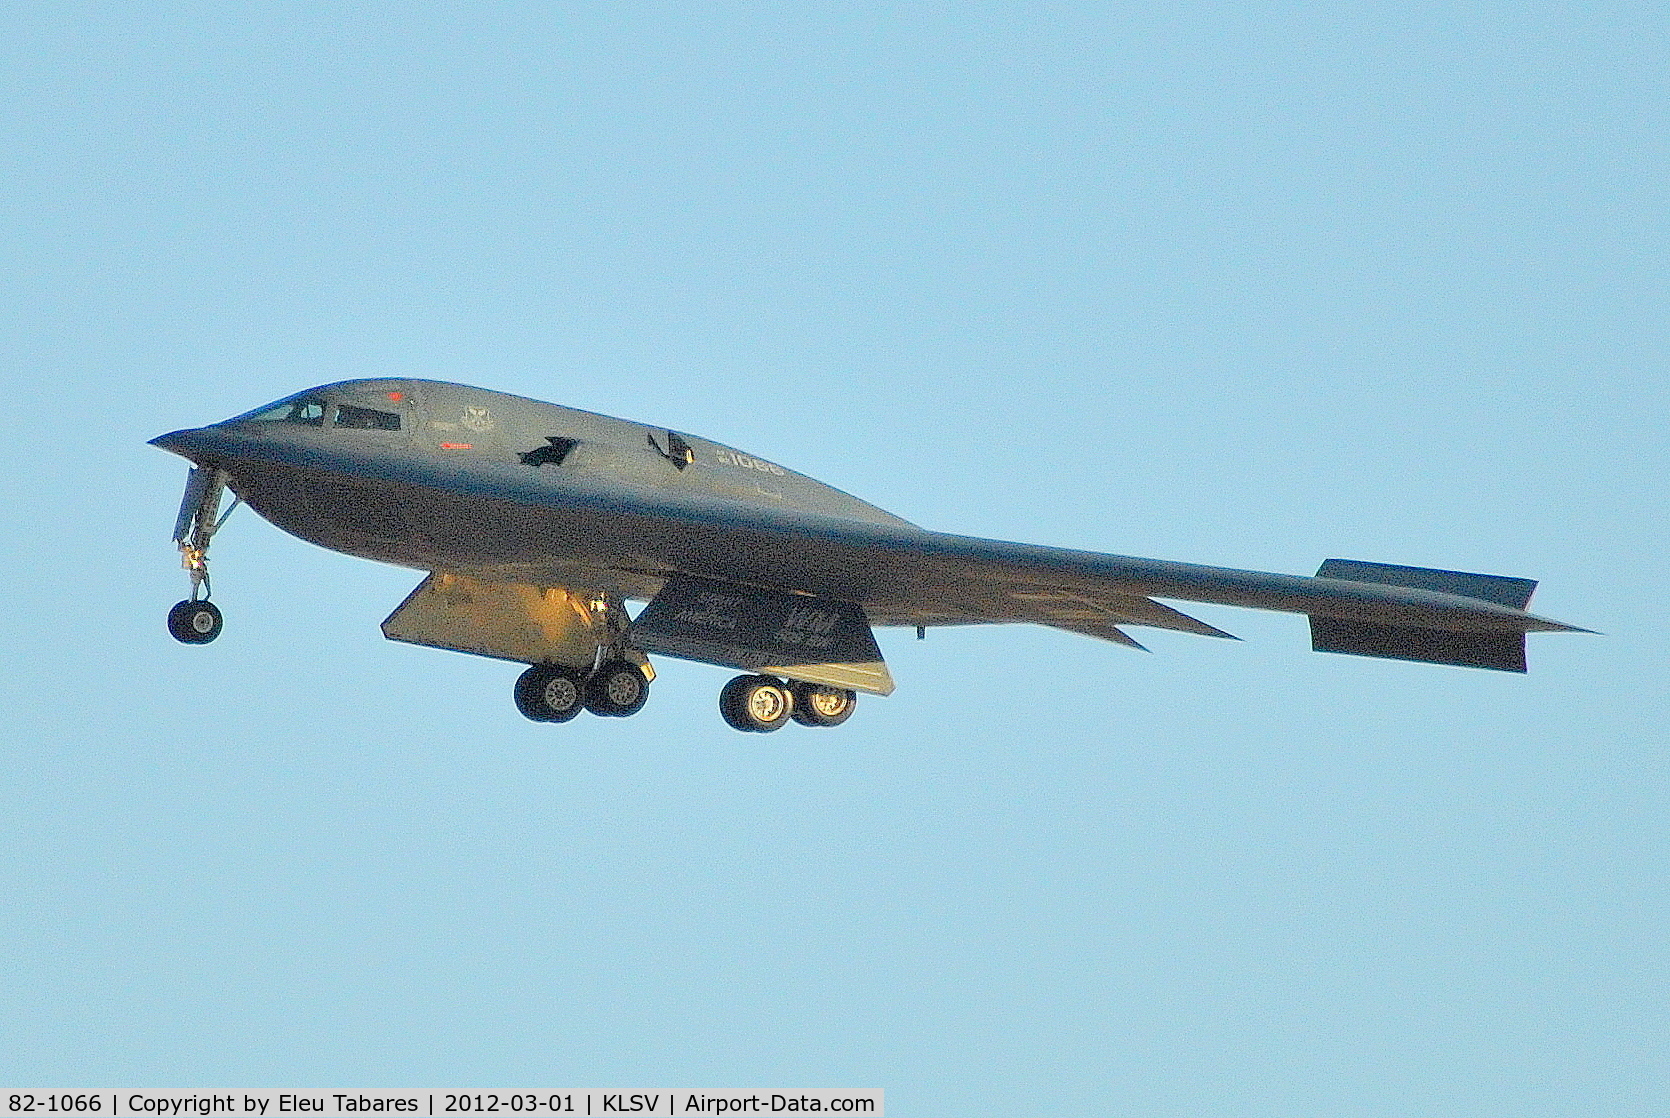 82-1066, 1982 Northrop Grumman B-2A Spirit C/N 1001/AV-1, Taken during Red Flag Exercise at Nellis Air Force Base, Nevada.